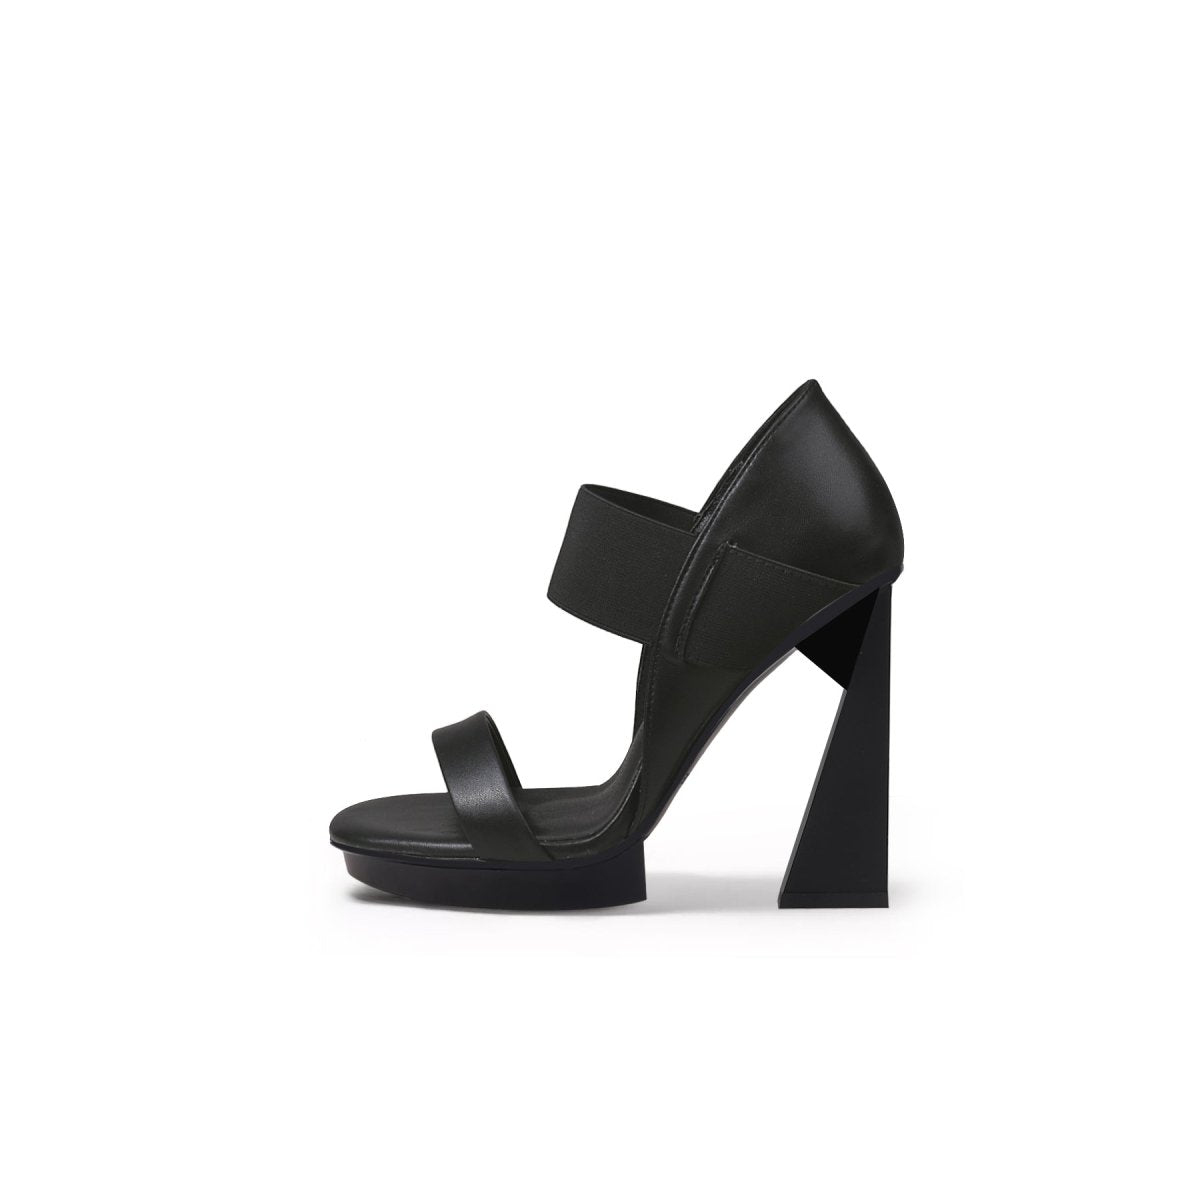 Suki Open-toe Trape-heel Black Sandals